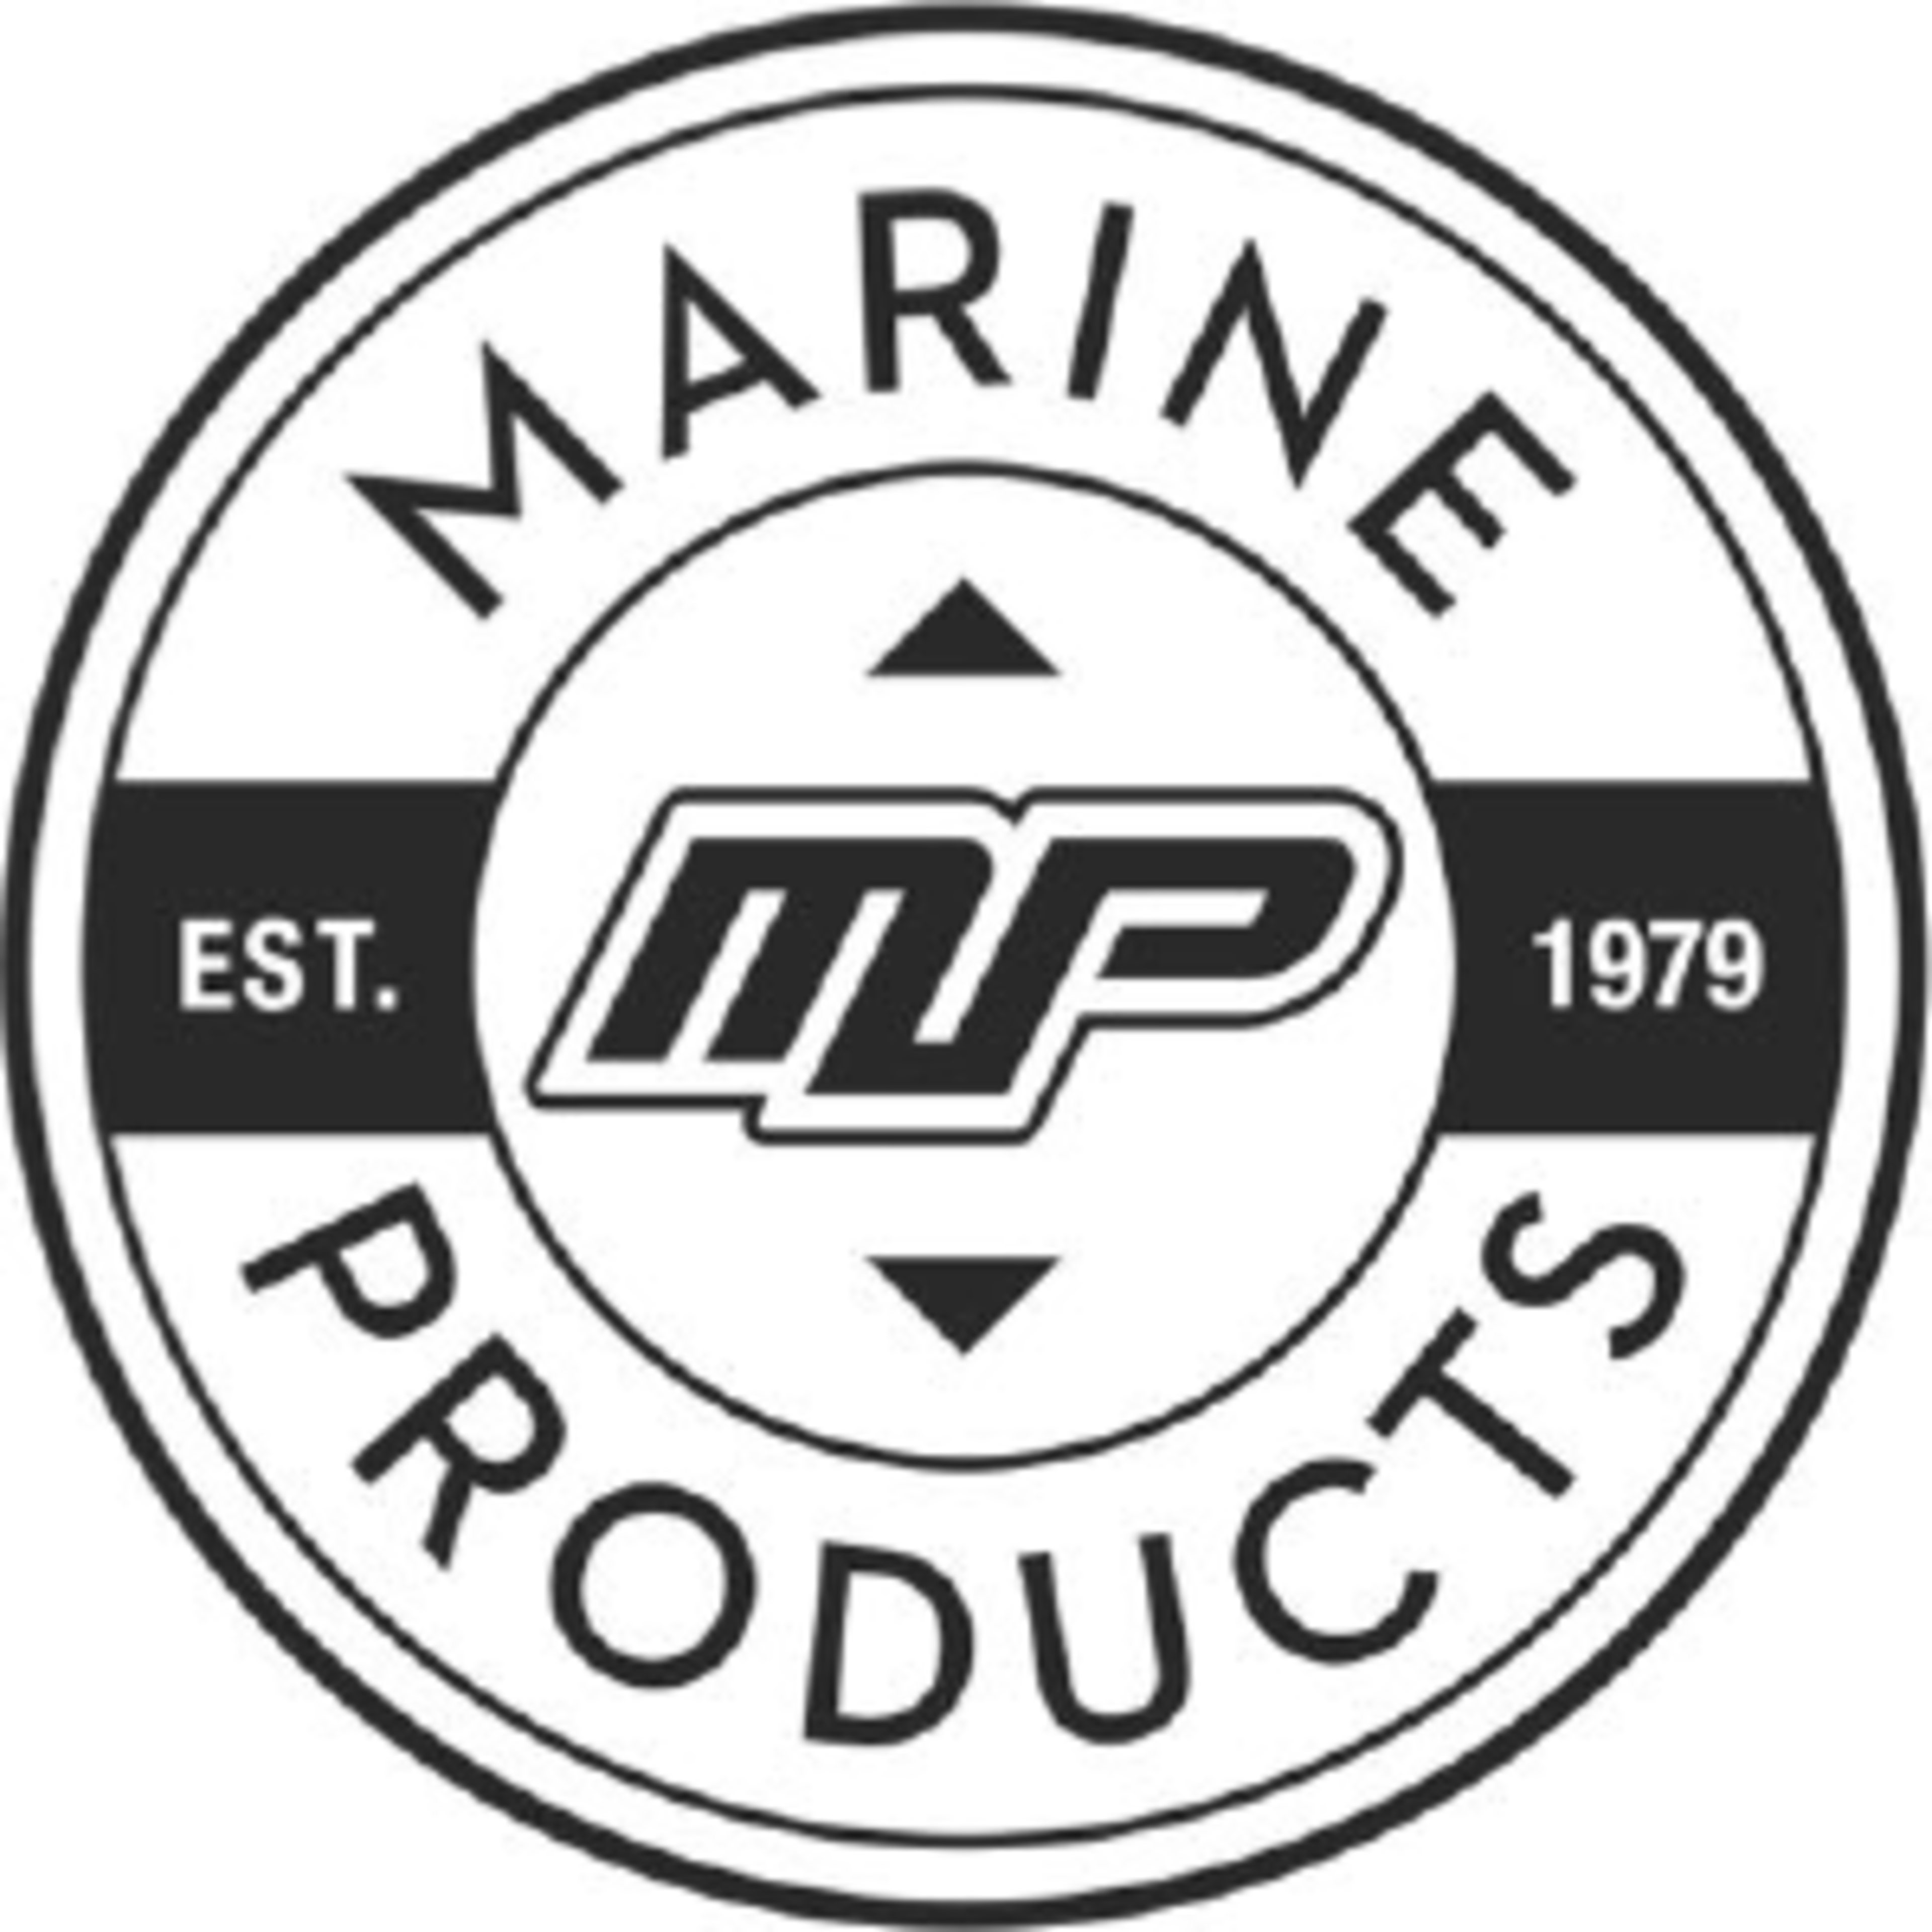 Marine Products Code